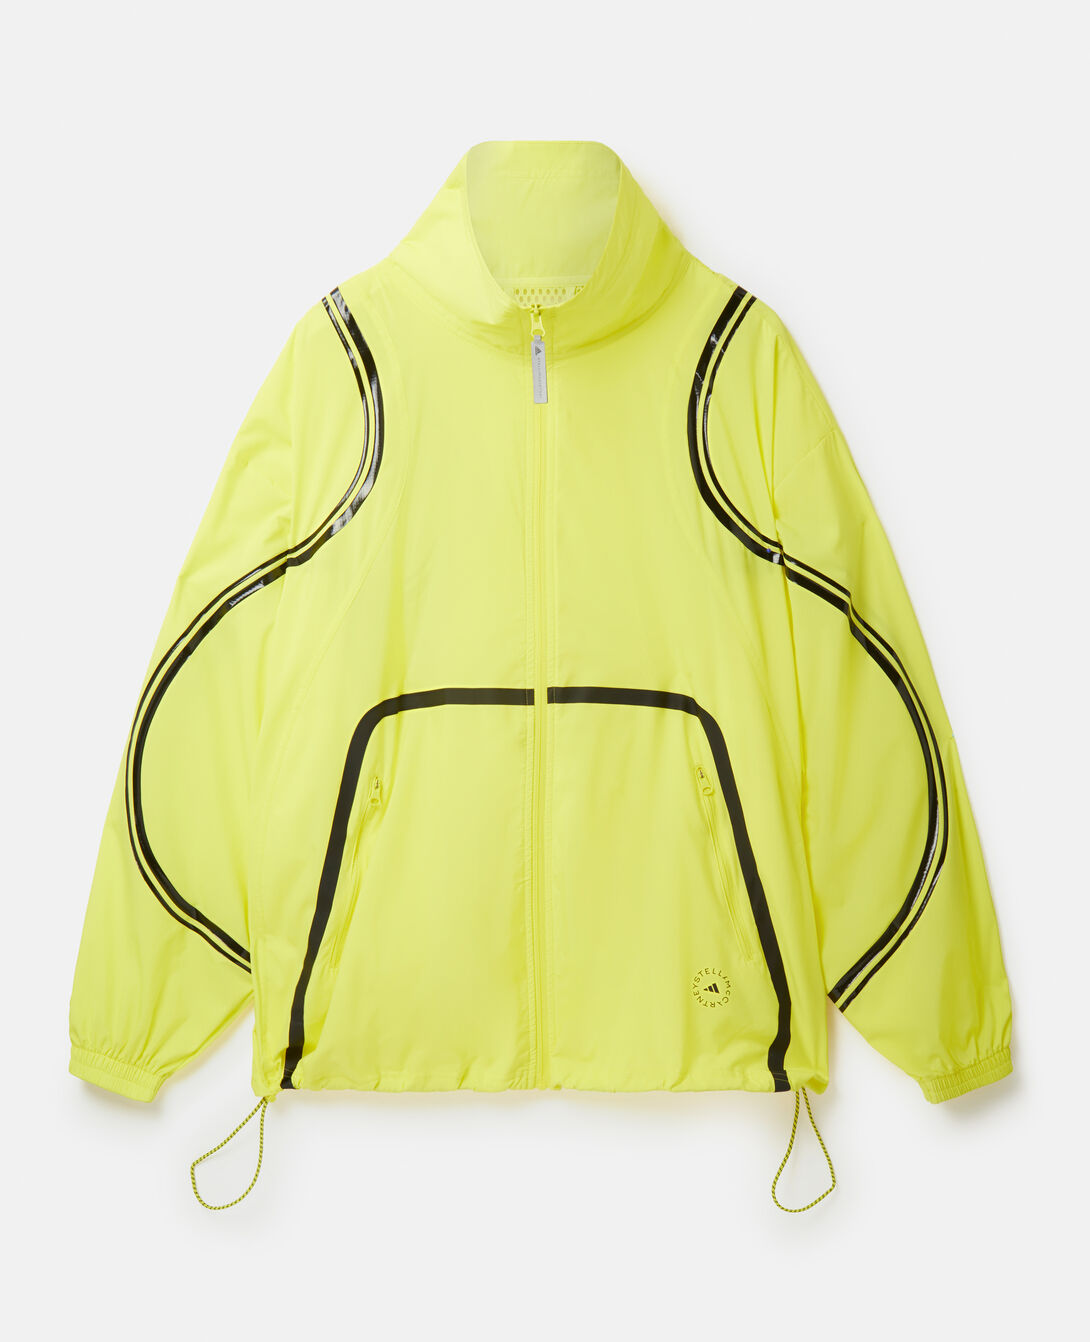 Adidas By Stella McCartney TRUEPACE WOVEN Training Jacket Color Shock  Yellow New